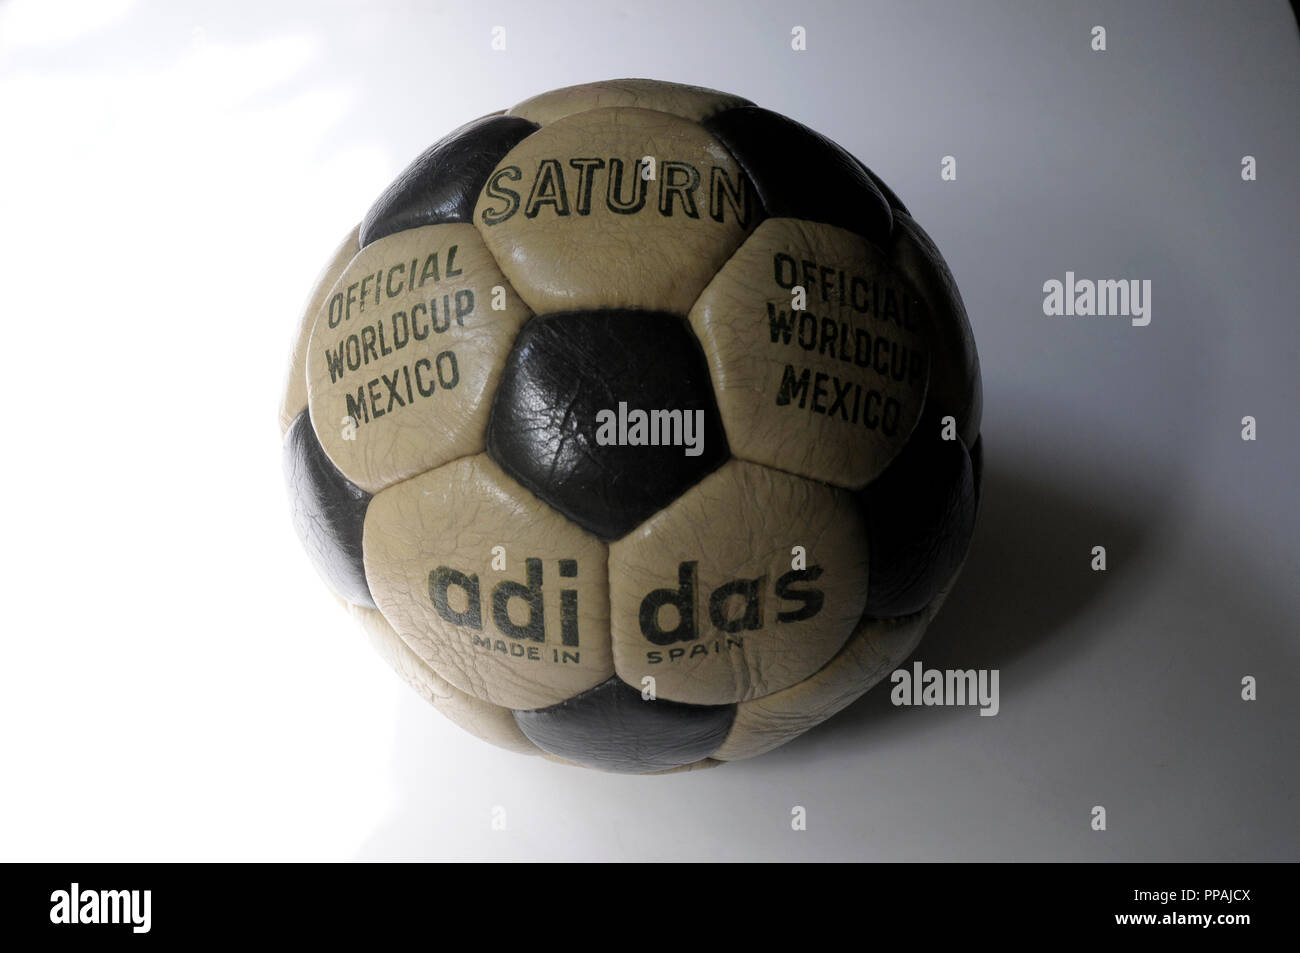 LVintage, cuir ballon de soccer, Adidas, fabriqué en Espagne, SATURNE, Mexique, FOOTBALL Worldcup officiel ballon, pelote basque de futbol Banque D'Images